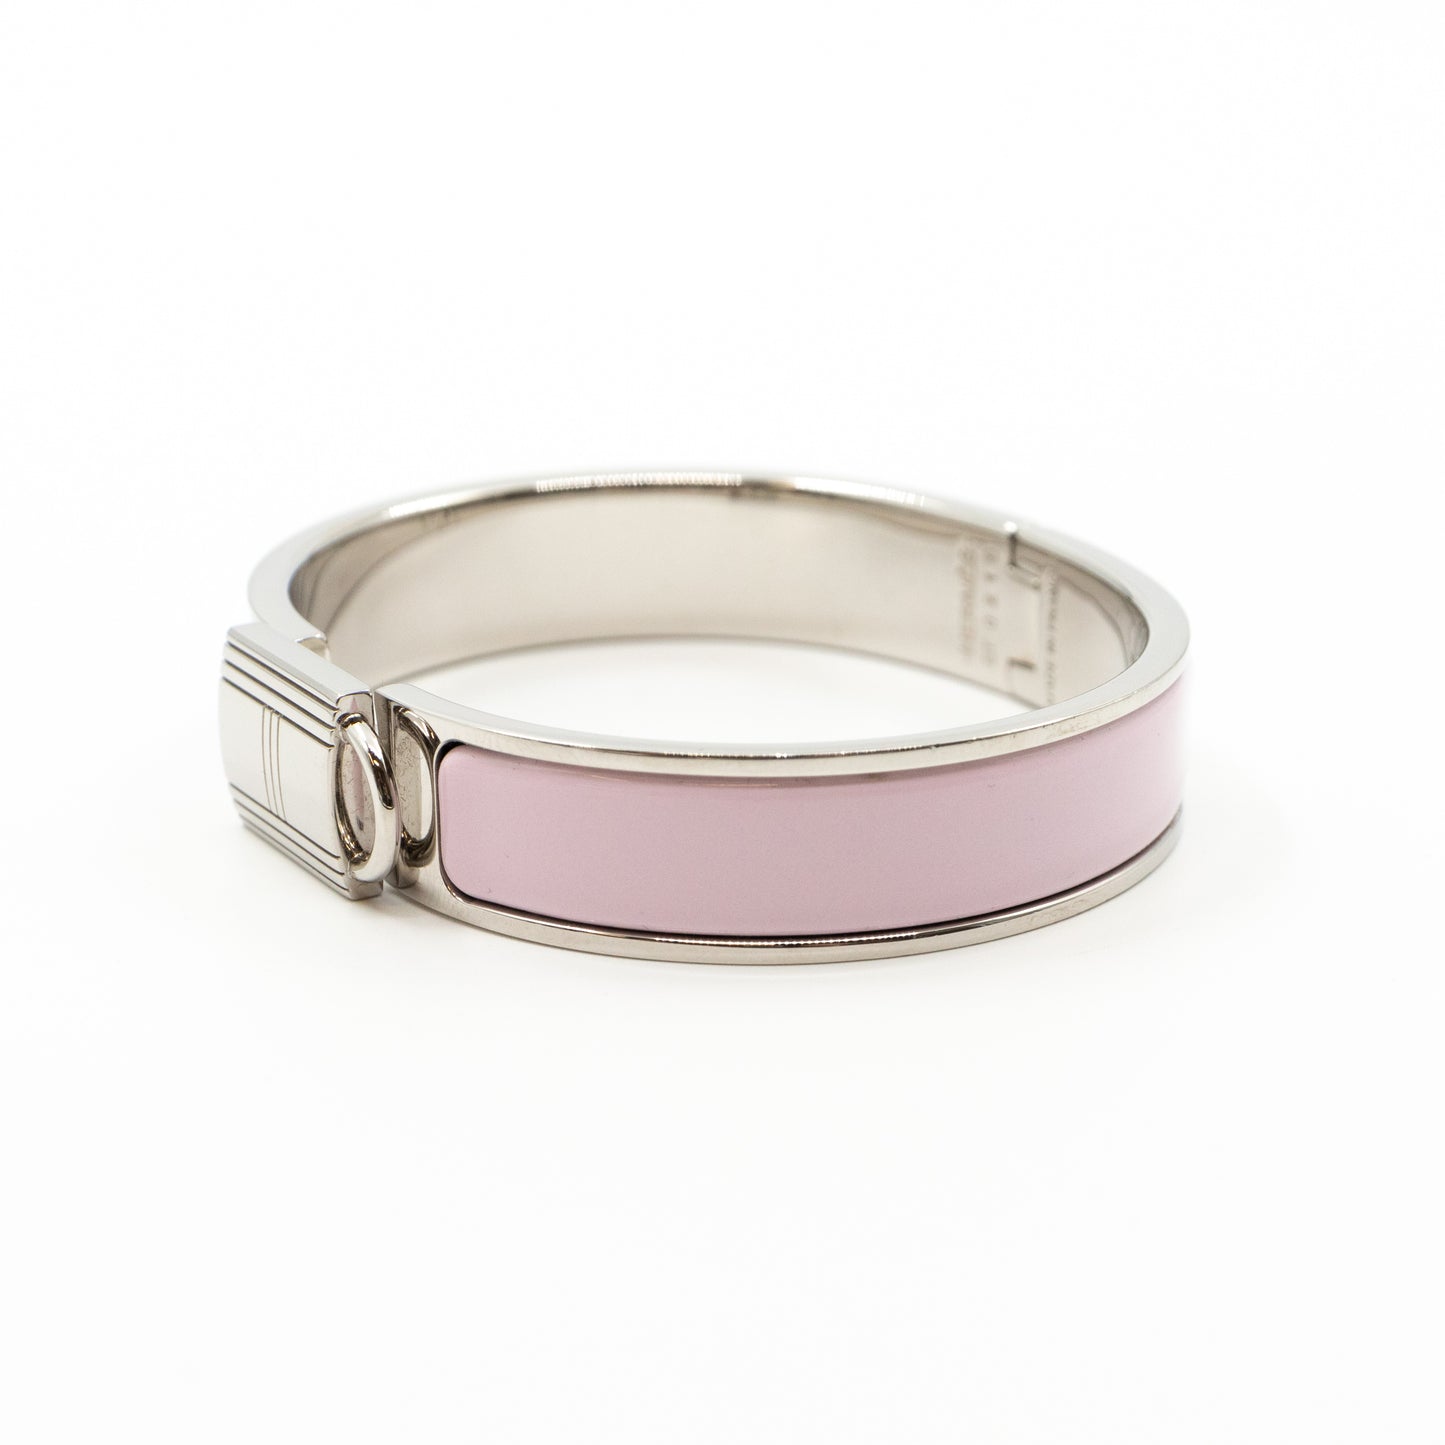 Clic Cadenas Bracelet Light Pink Silver